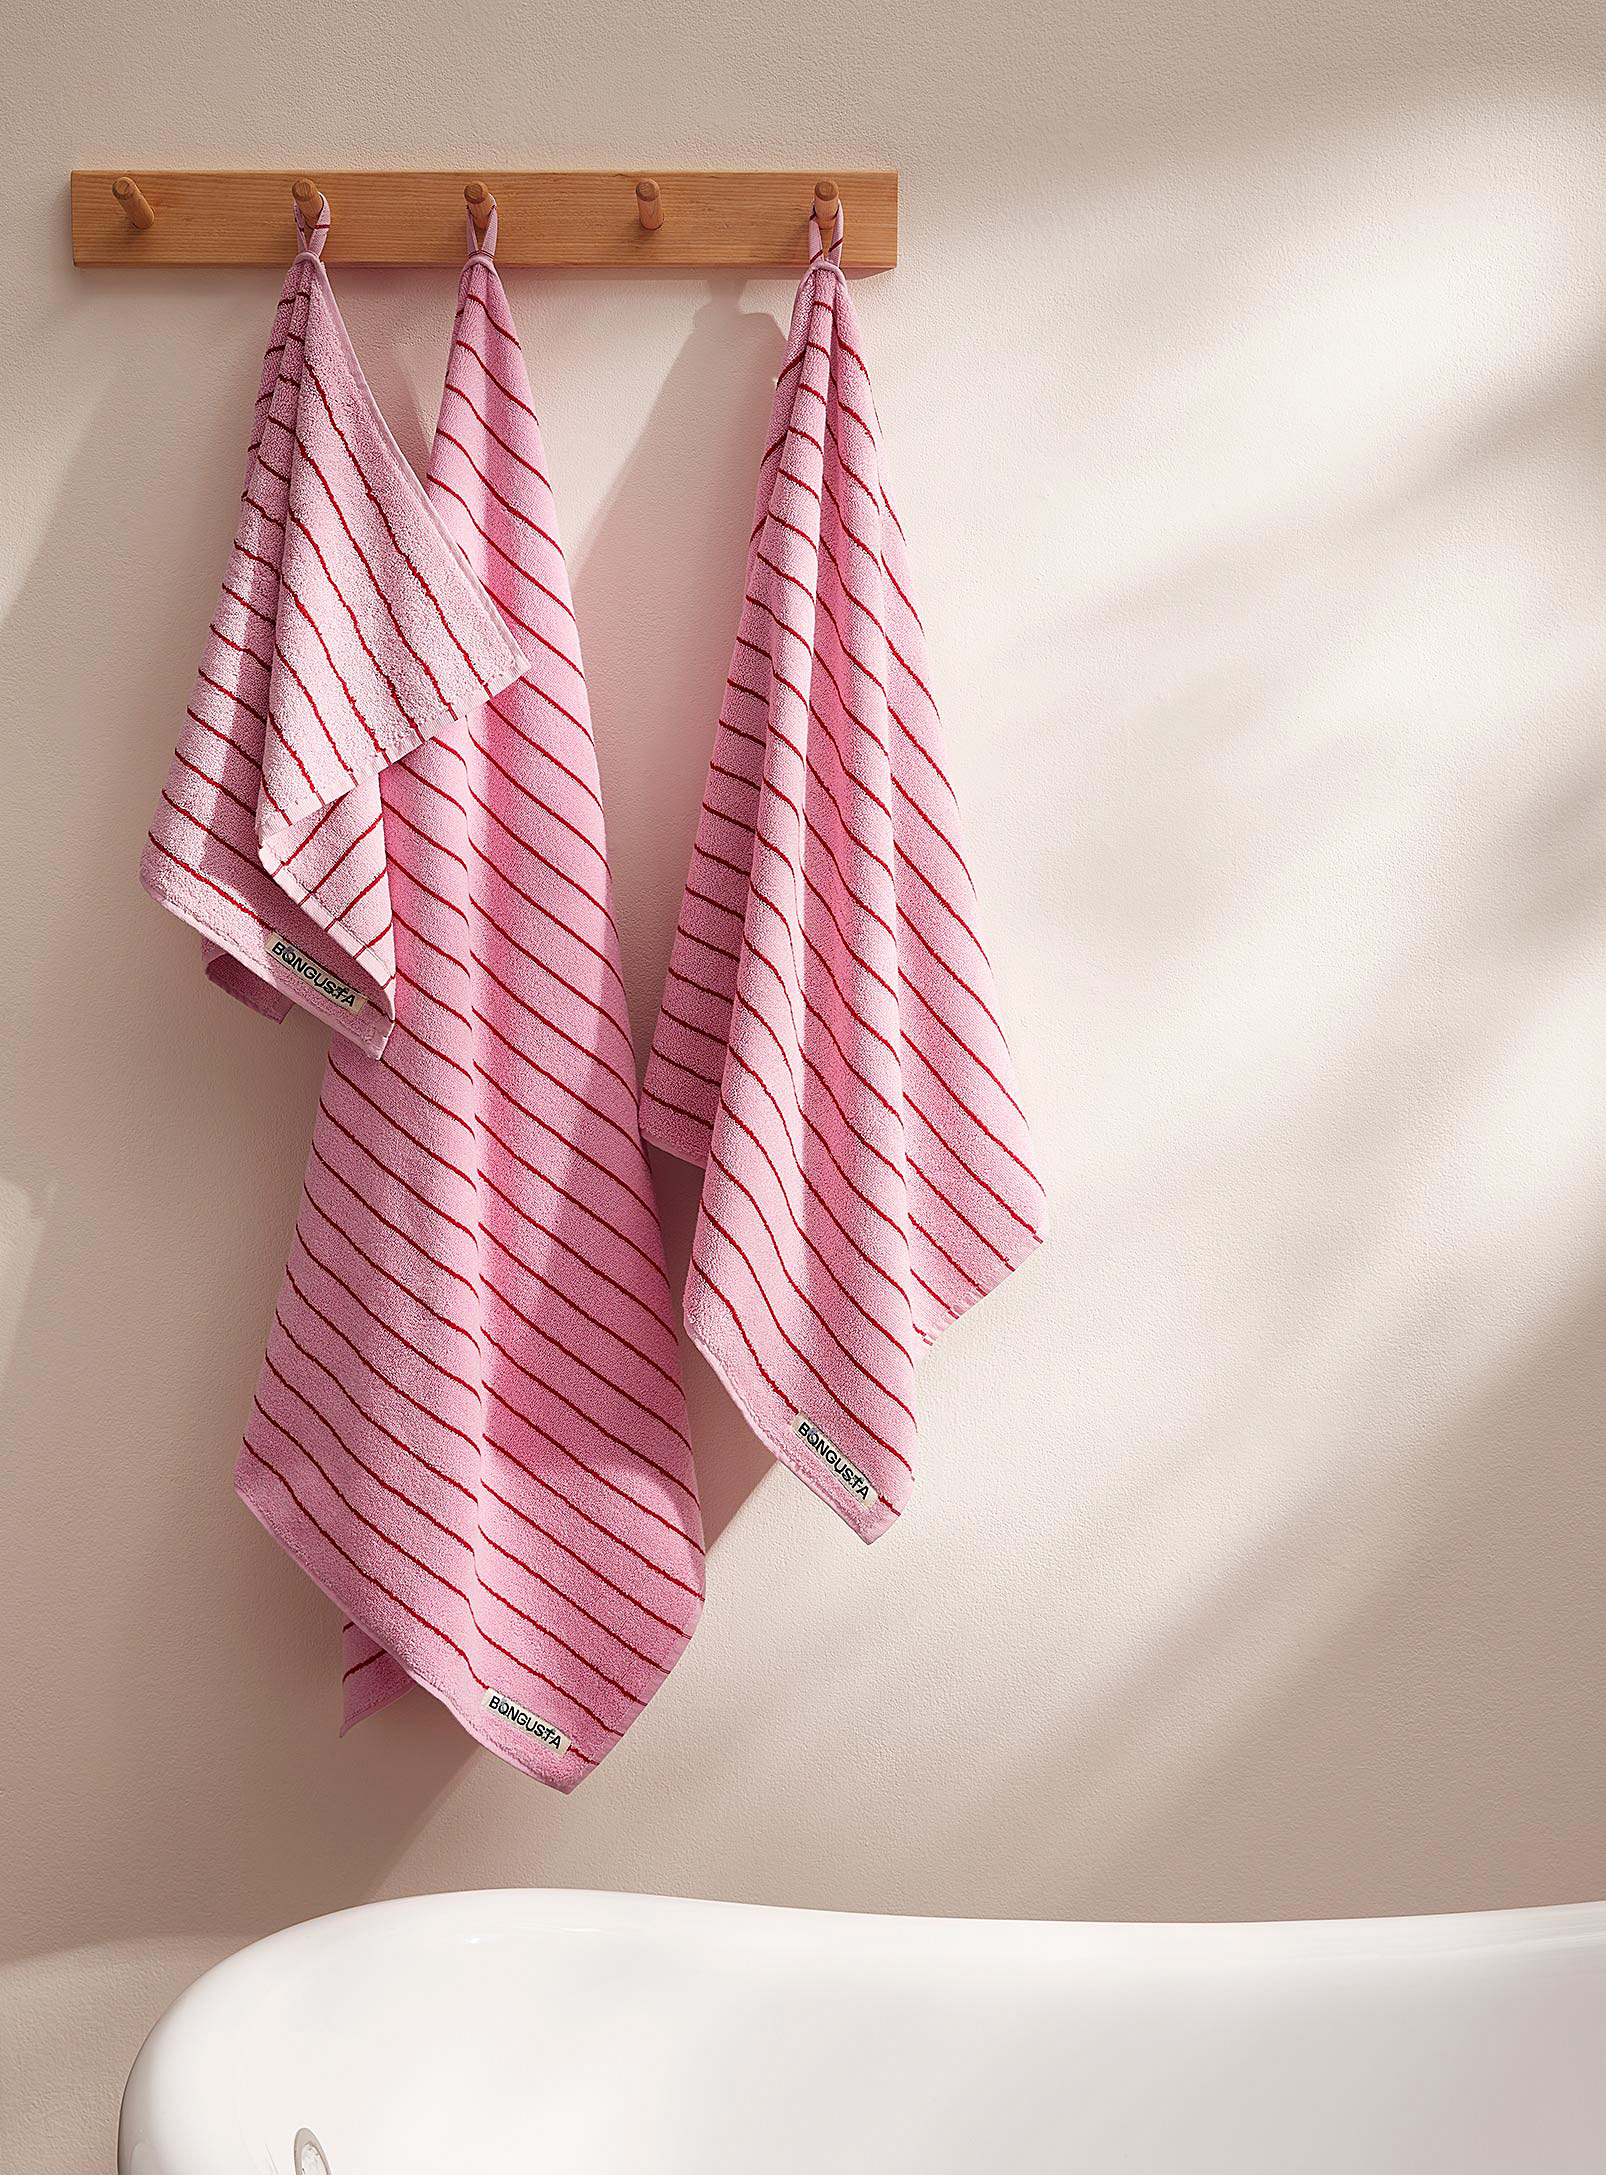 Bongusta Naram Striped Towels In Pink